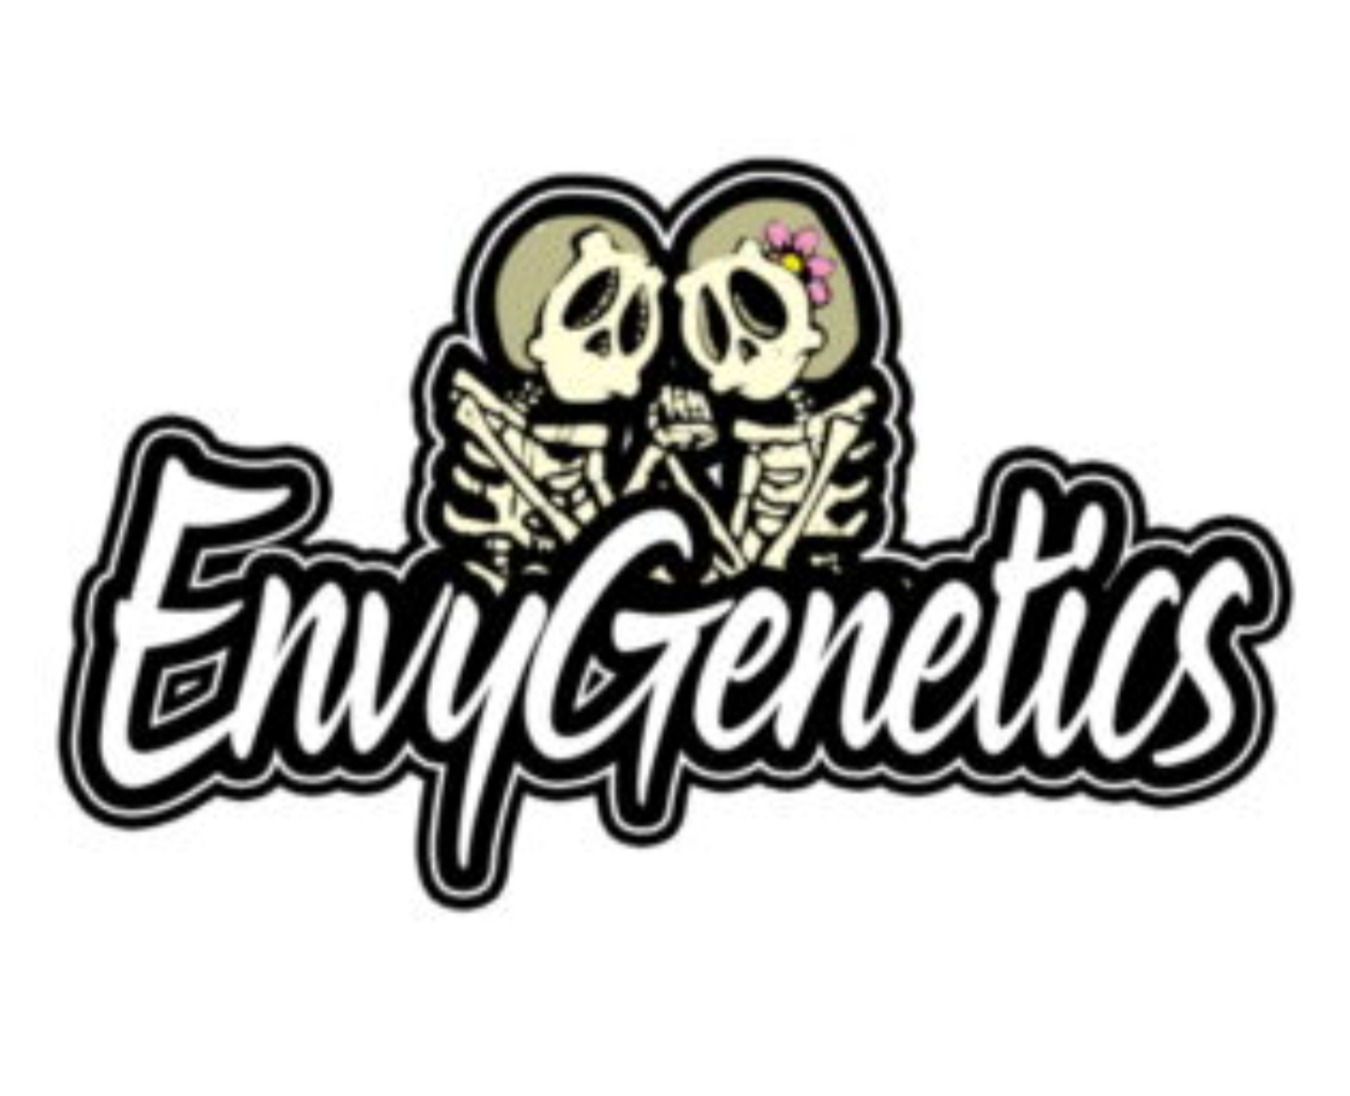 envygenetics_edited.jpg